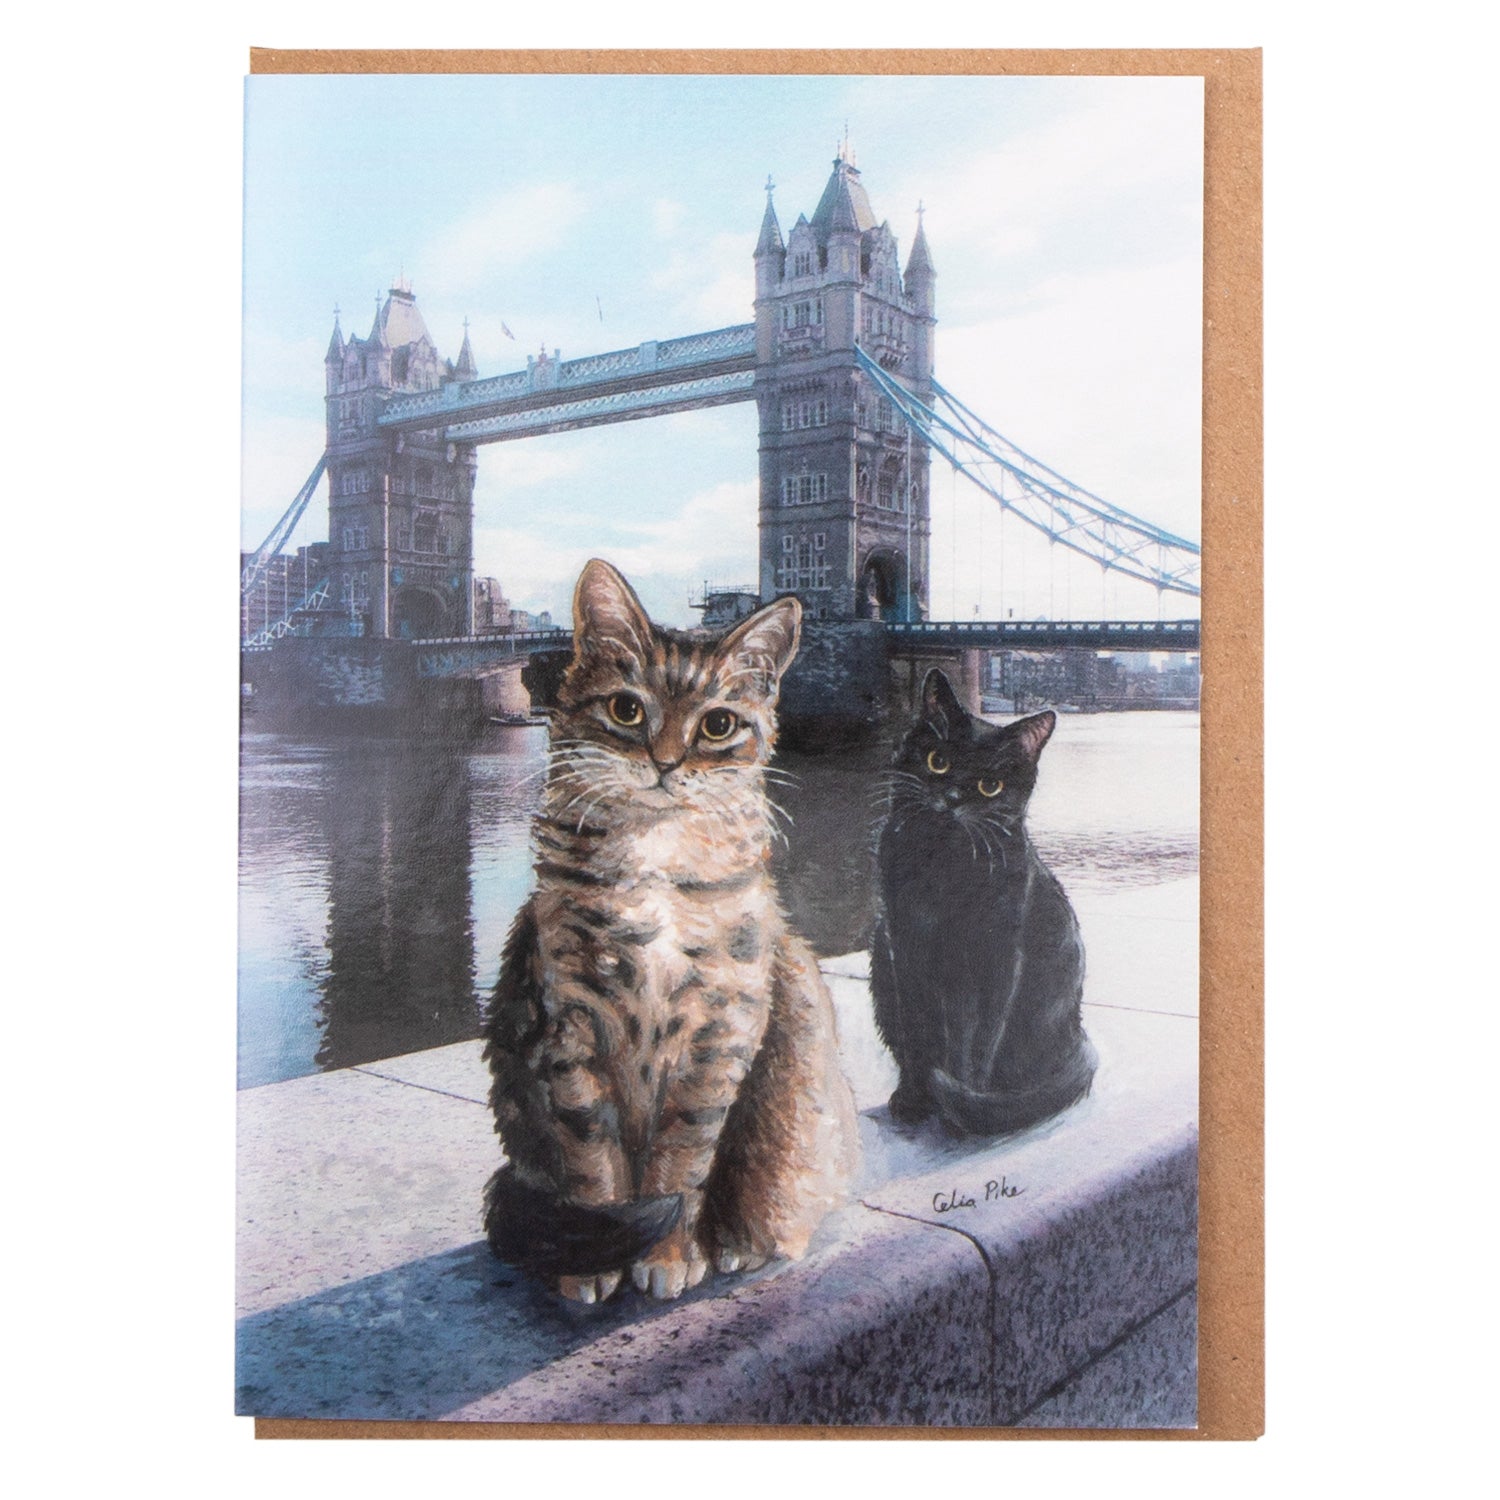 Celia Pike Tower Bridge Cats Greeting Card